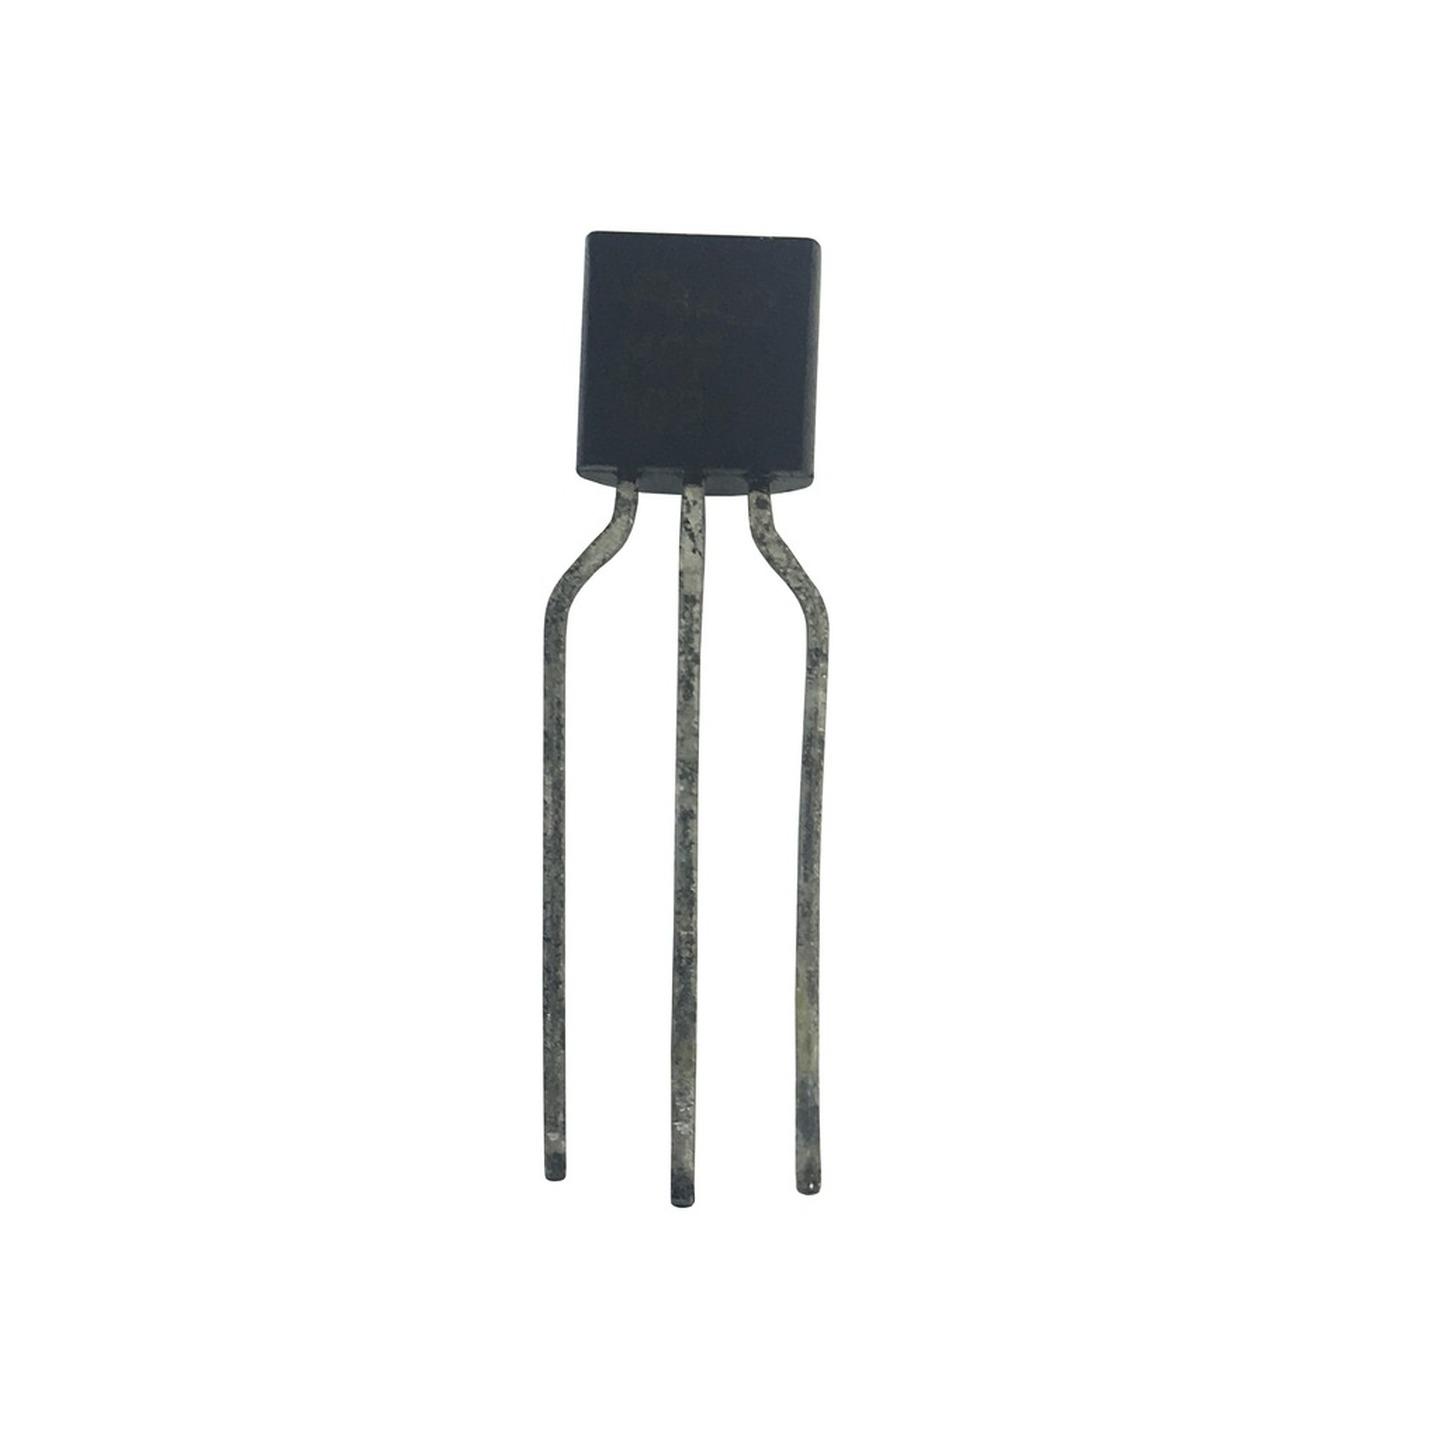 BC546 NPN Transistor